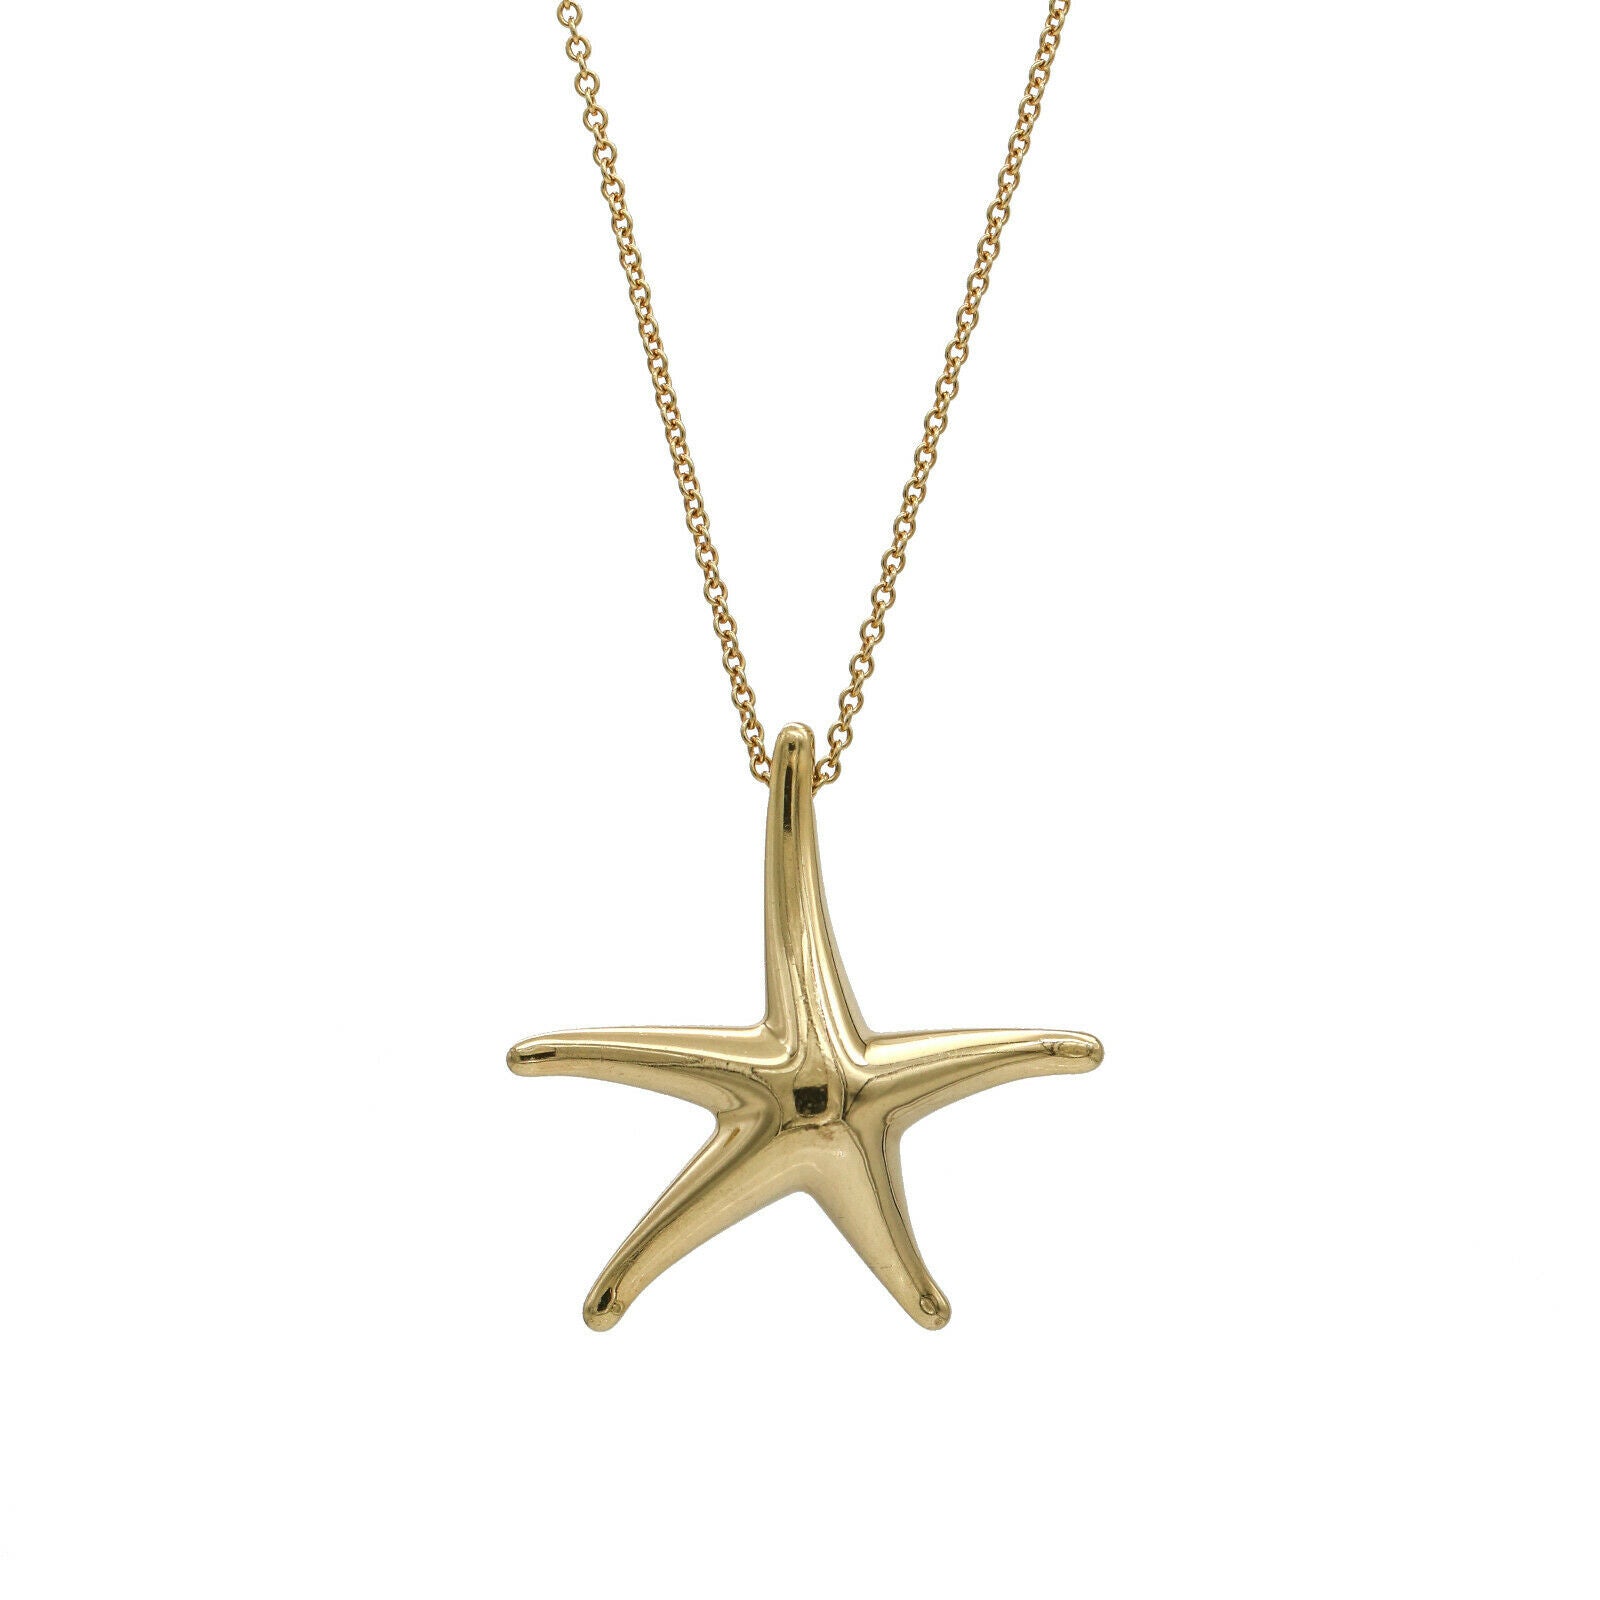 Tiffany & Co. Elsa Peretti Starfish Necklace in 18k Yellow Gold